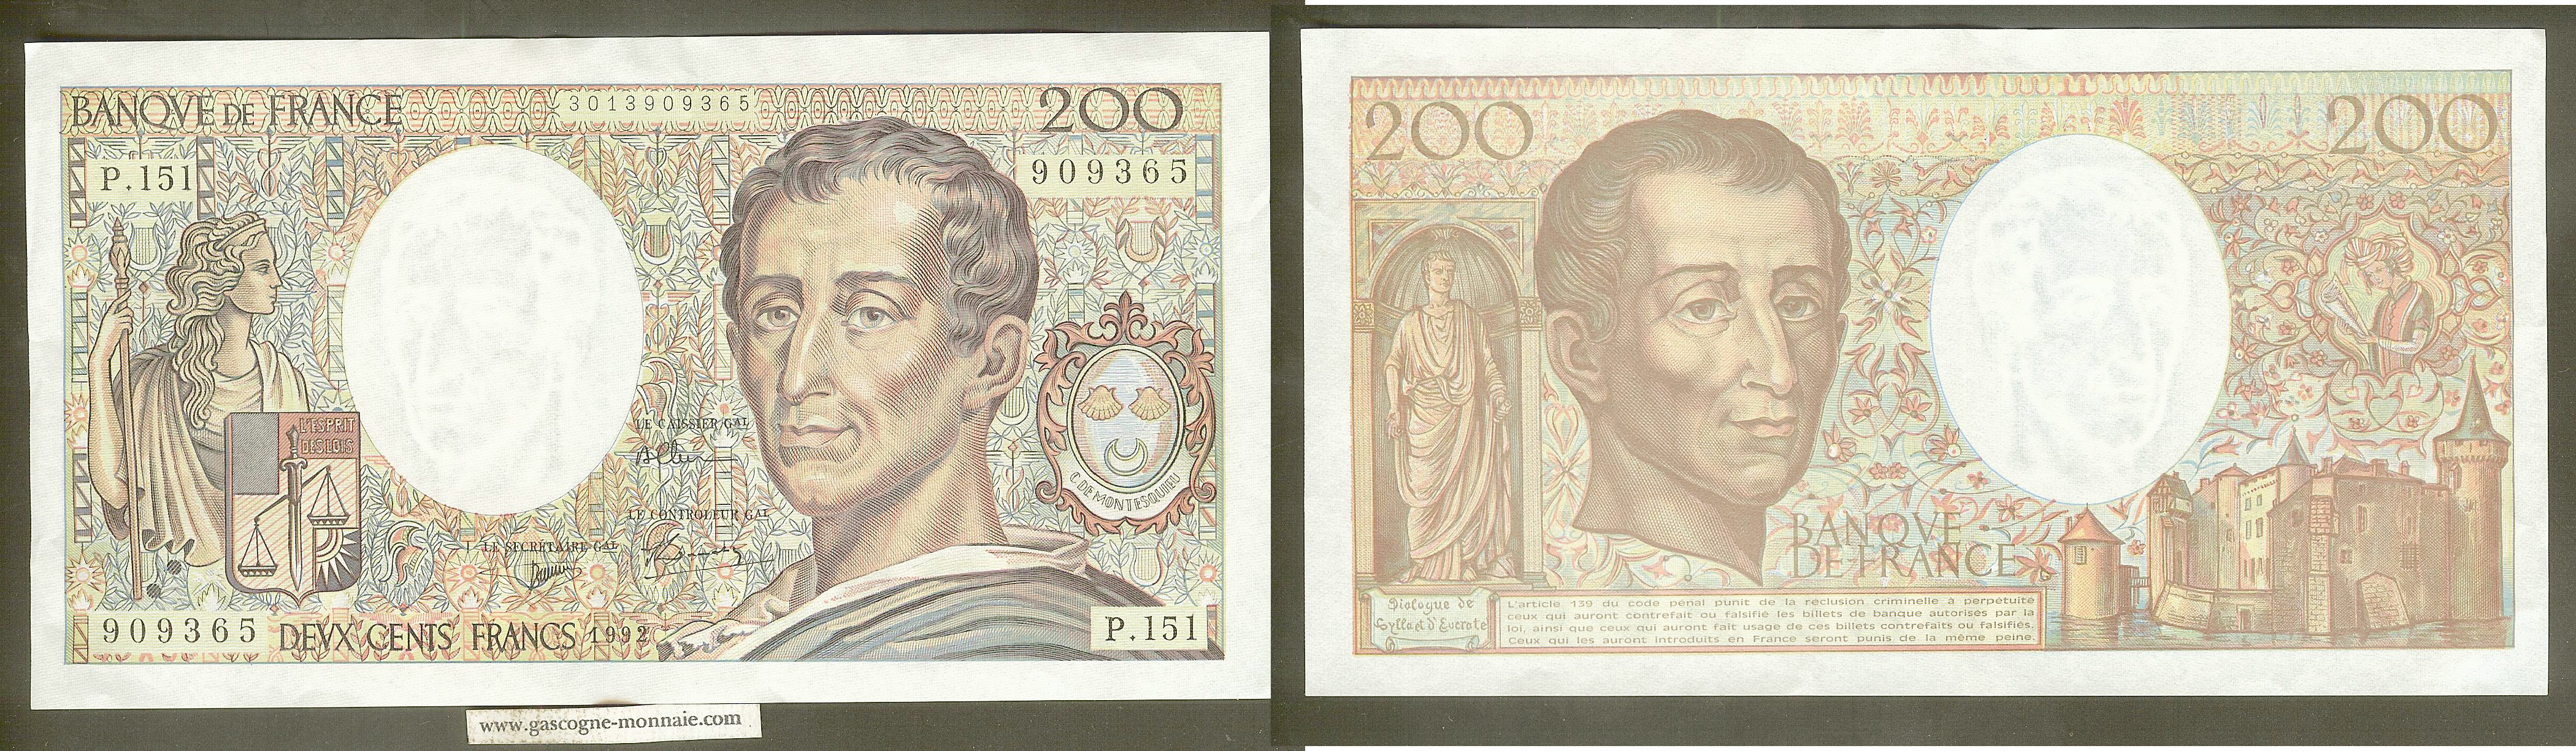 200 Francs 1992 Montesquieu N° 909365  P.151 SUP+